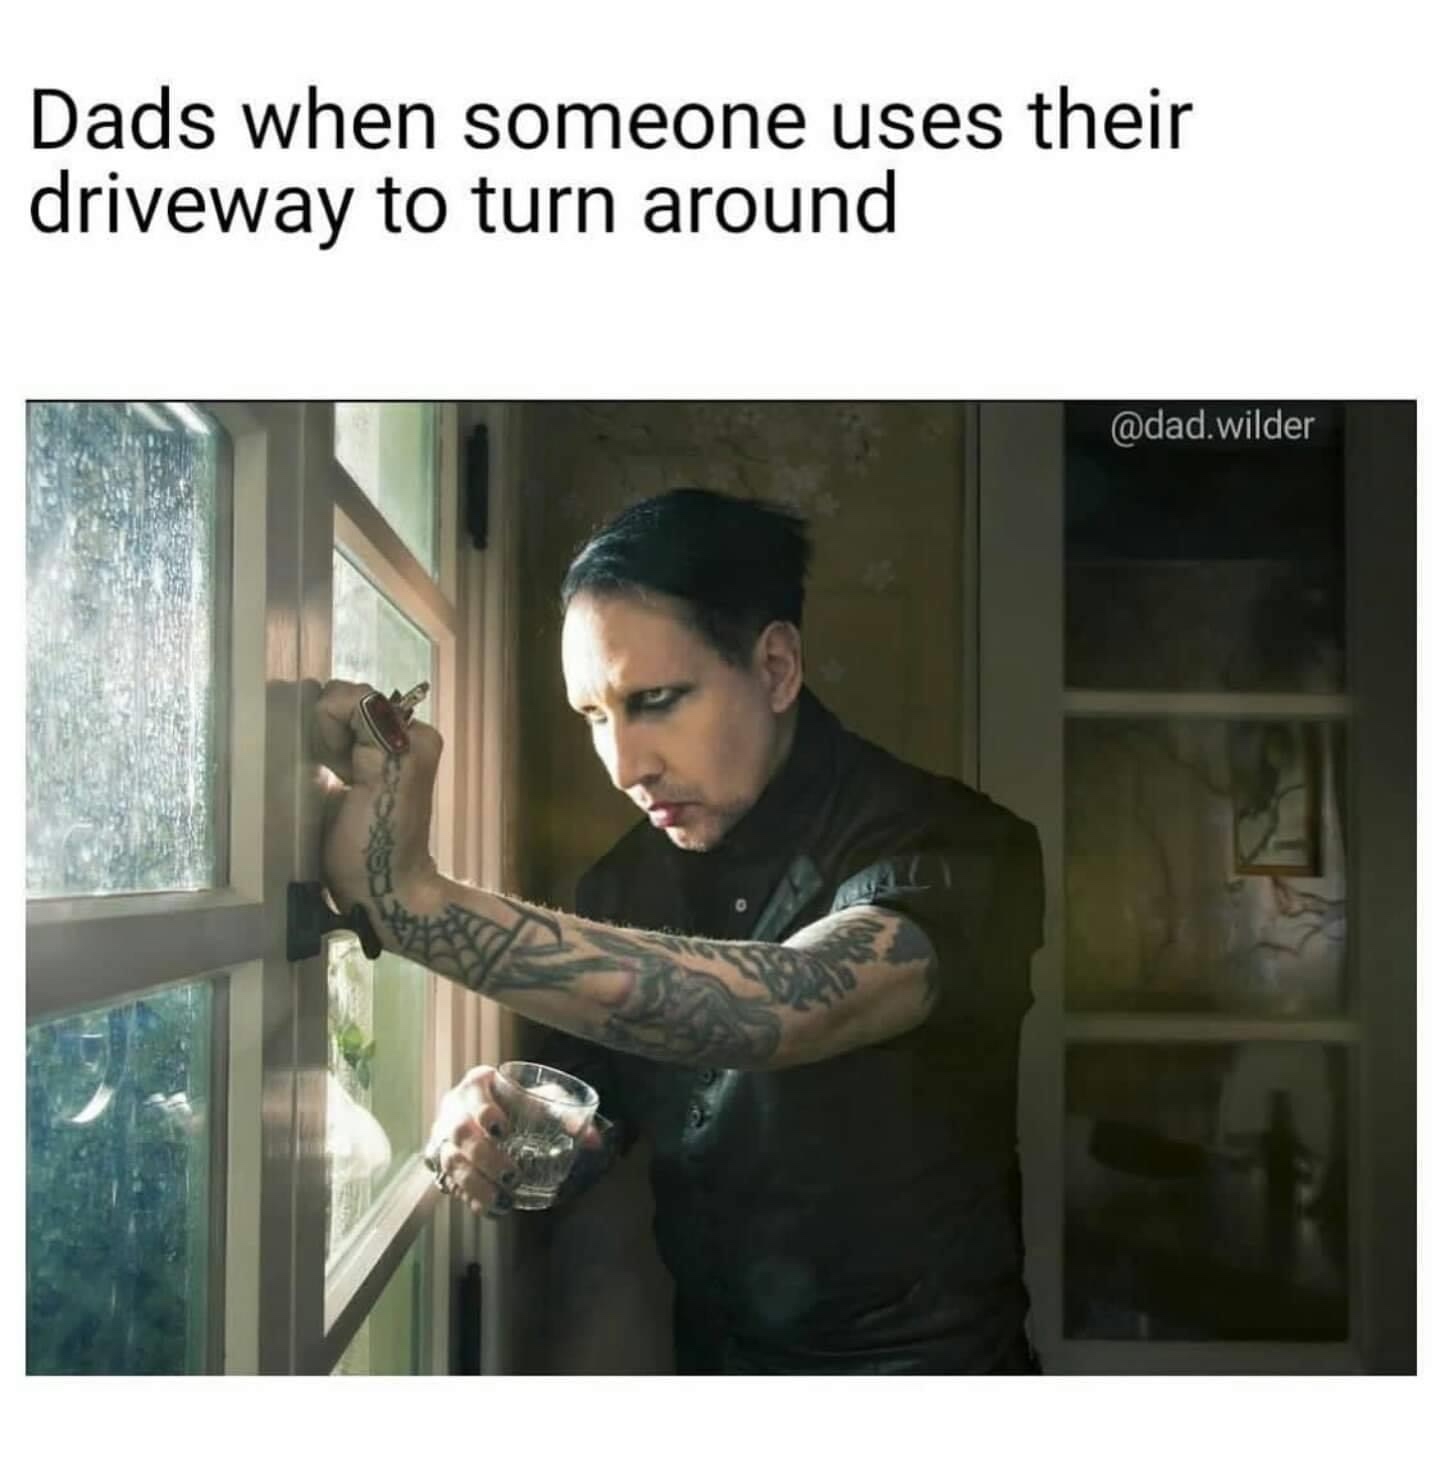 marilyn manson meme - Dads when someone uses their driveway to turn around .wilder